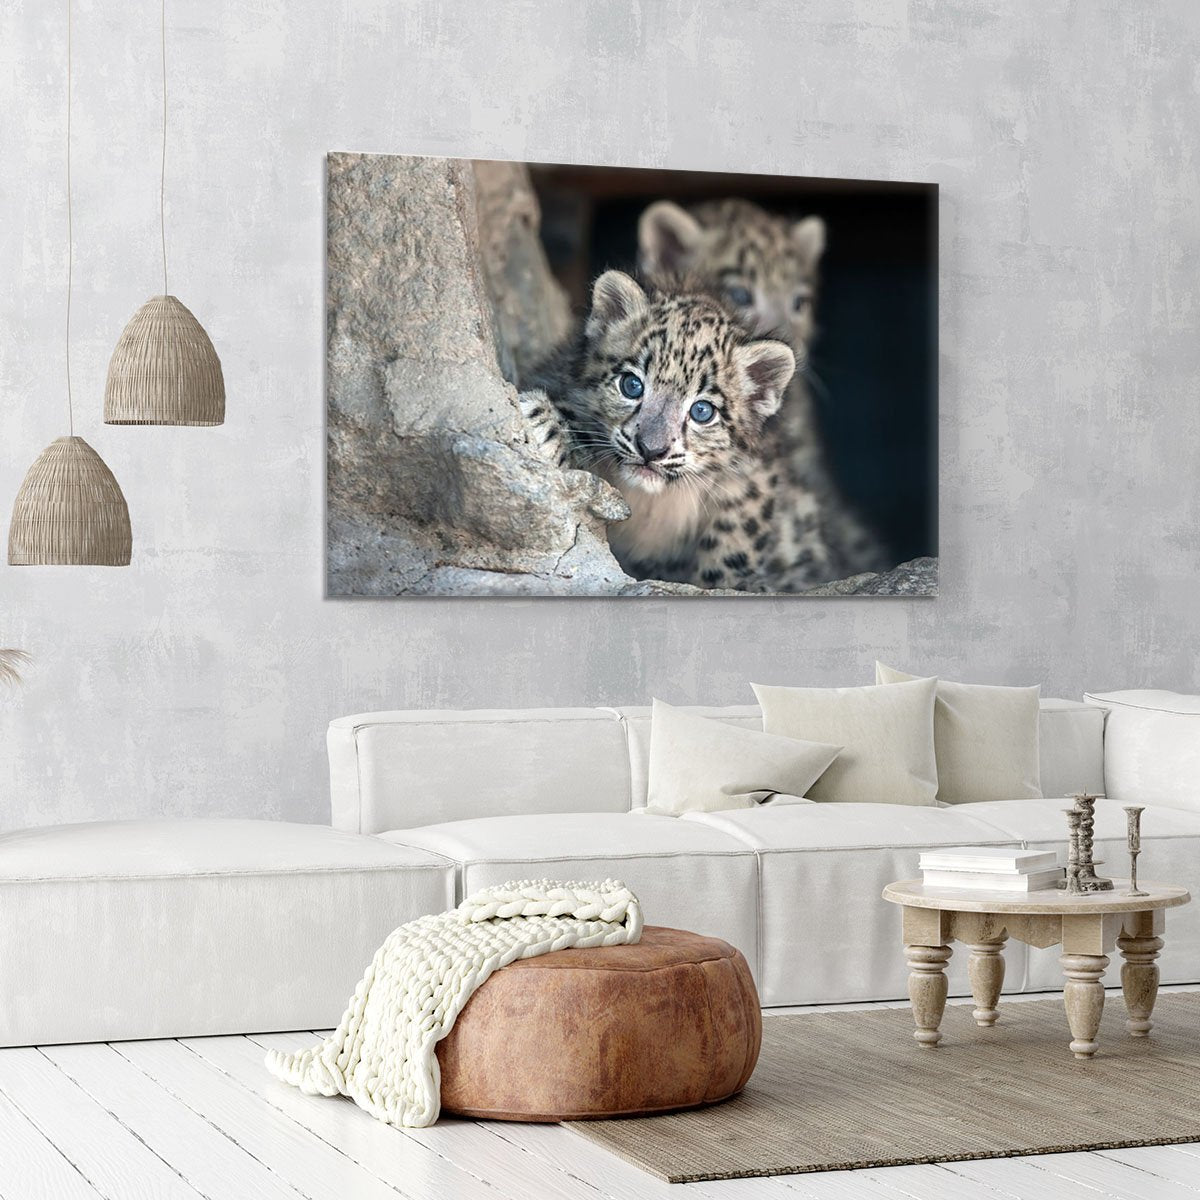 Snow leopard baby portrait Canvas Print or Poster